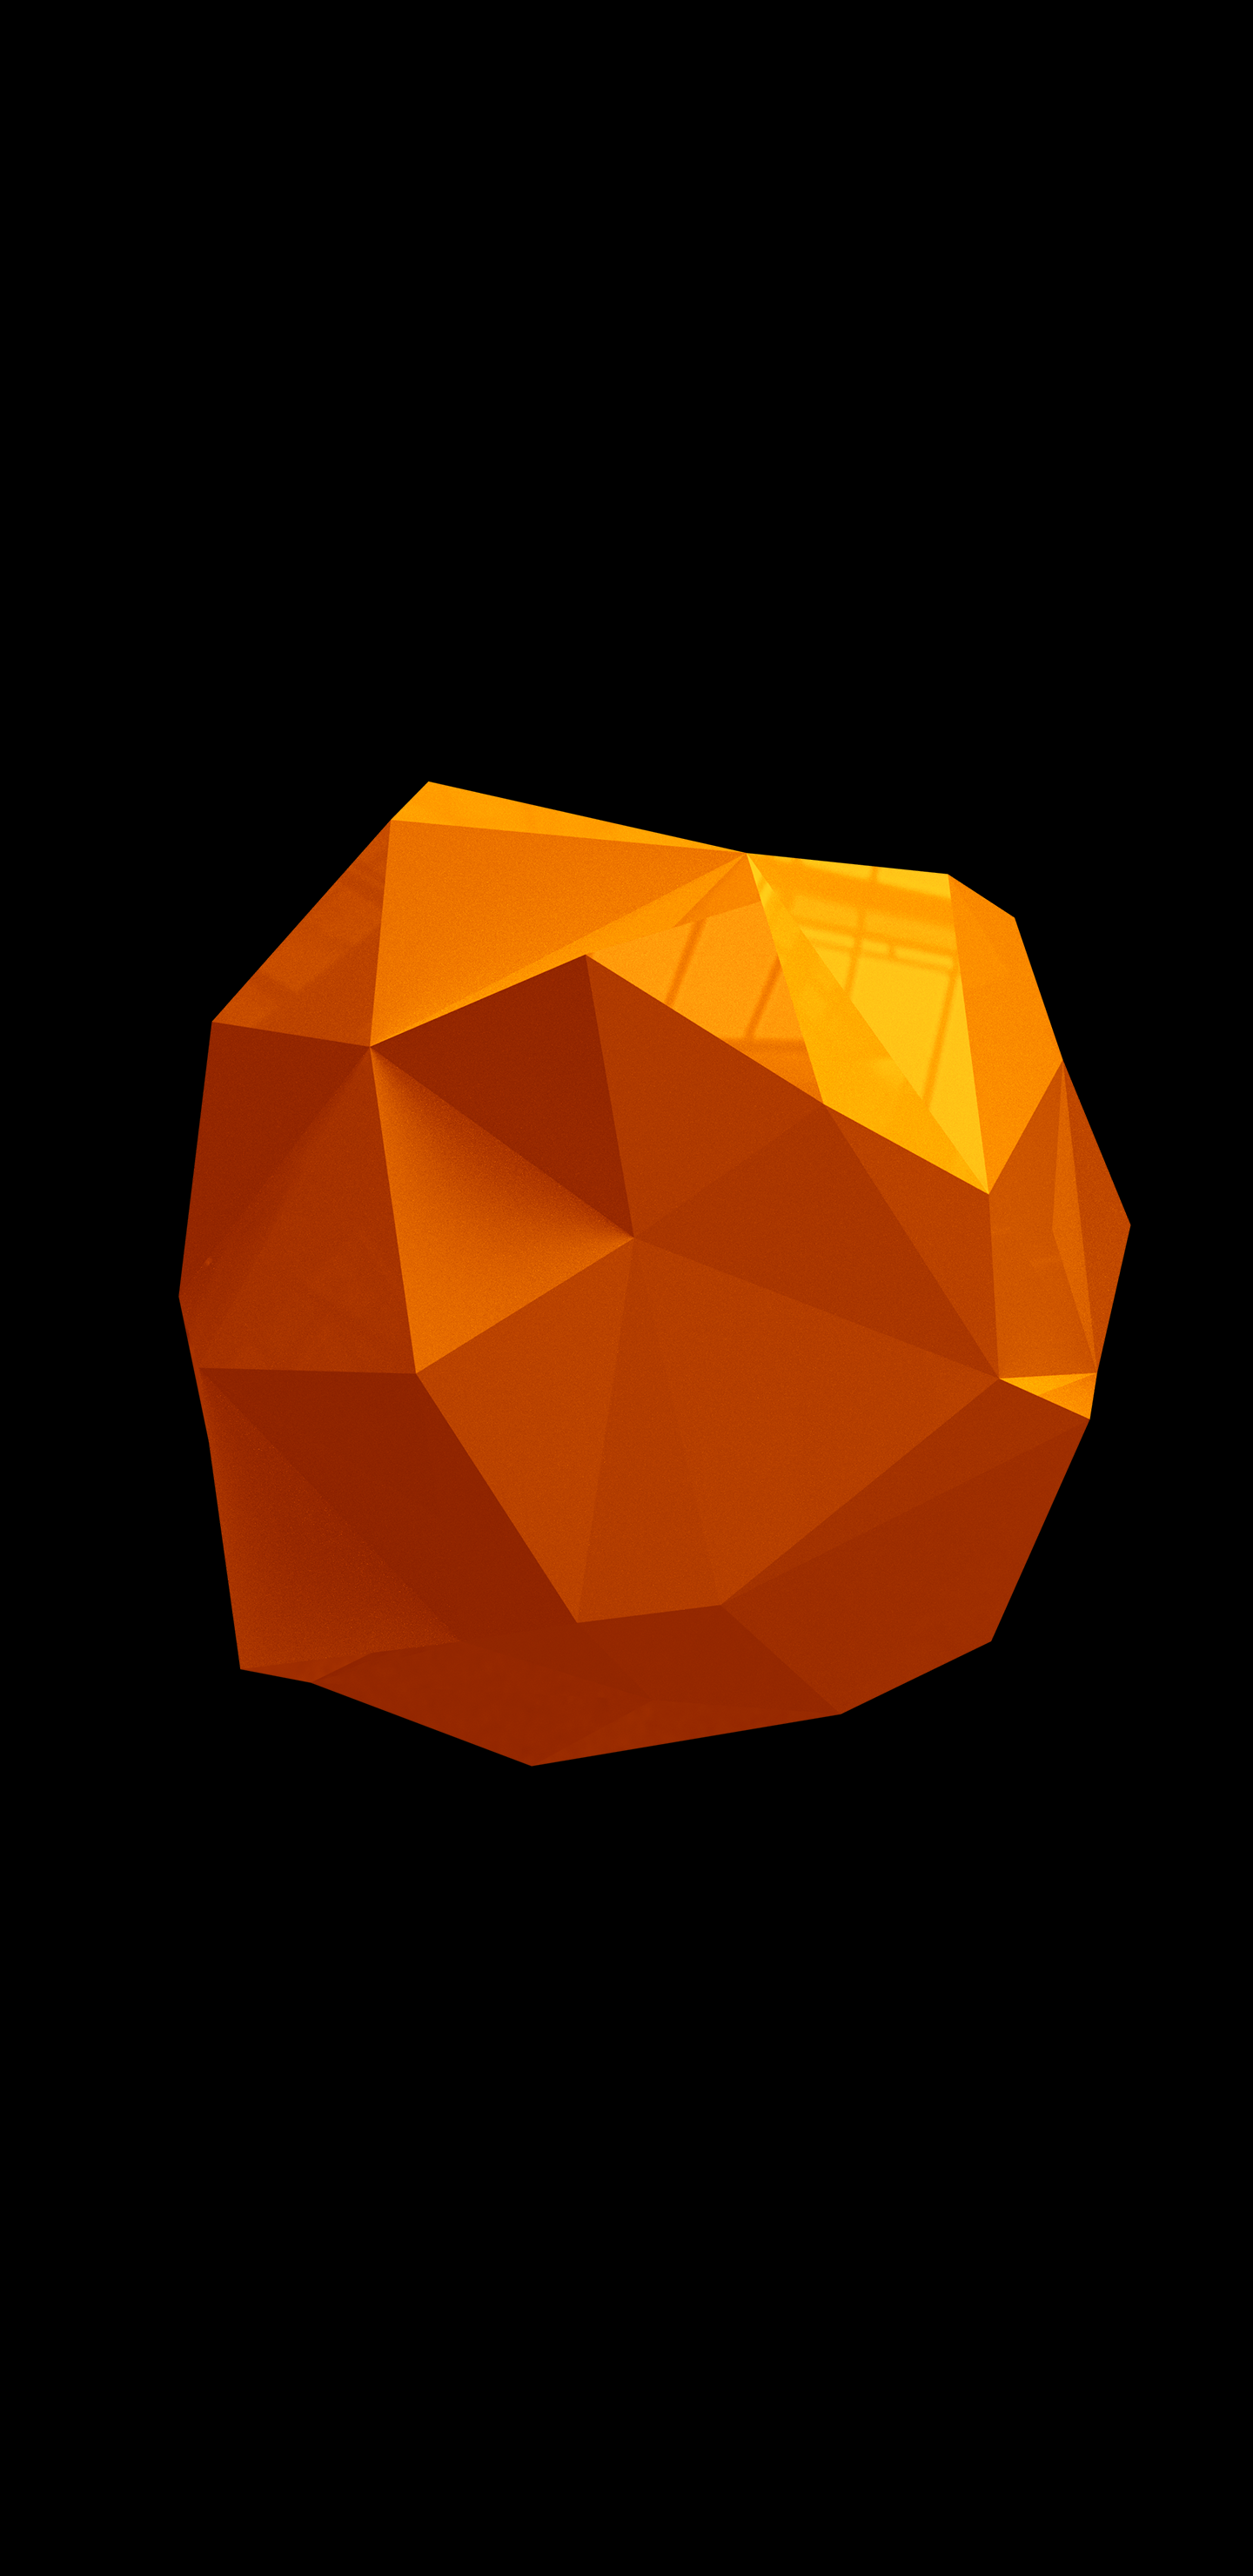 orange_gem.png 1 440×2 960 pixels. Android wallpaper, Wallpaper pc, Smartphone wallpaper